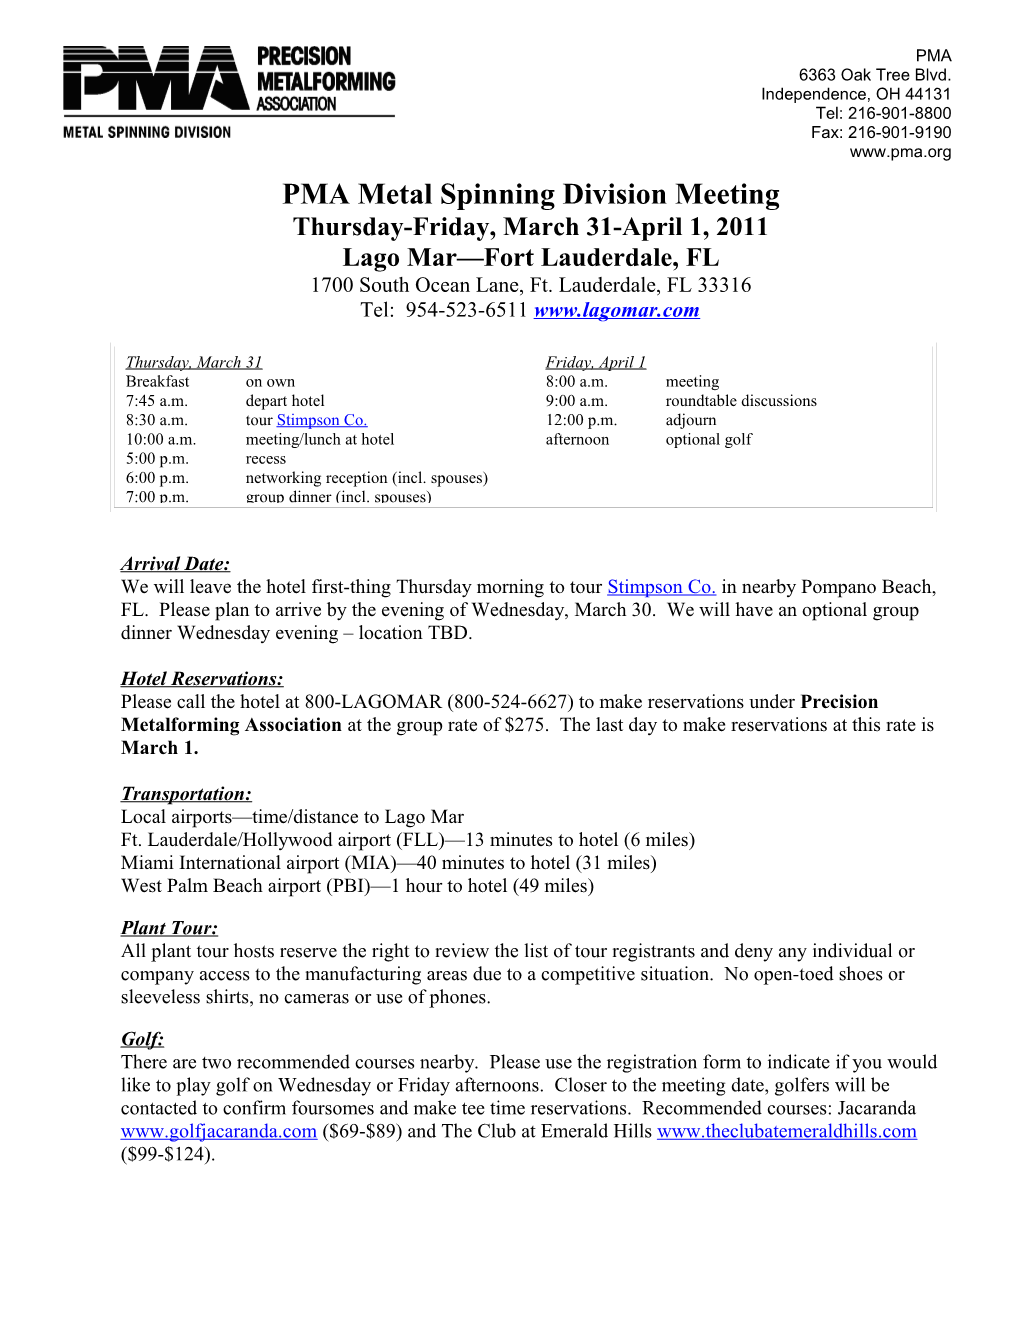 PMA Metal Spinning Division Meeting, Thursday-Friday, September 17-18, 2009